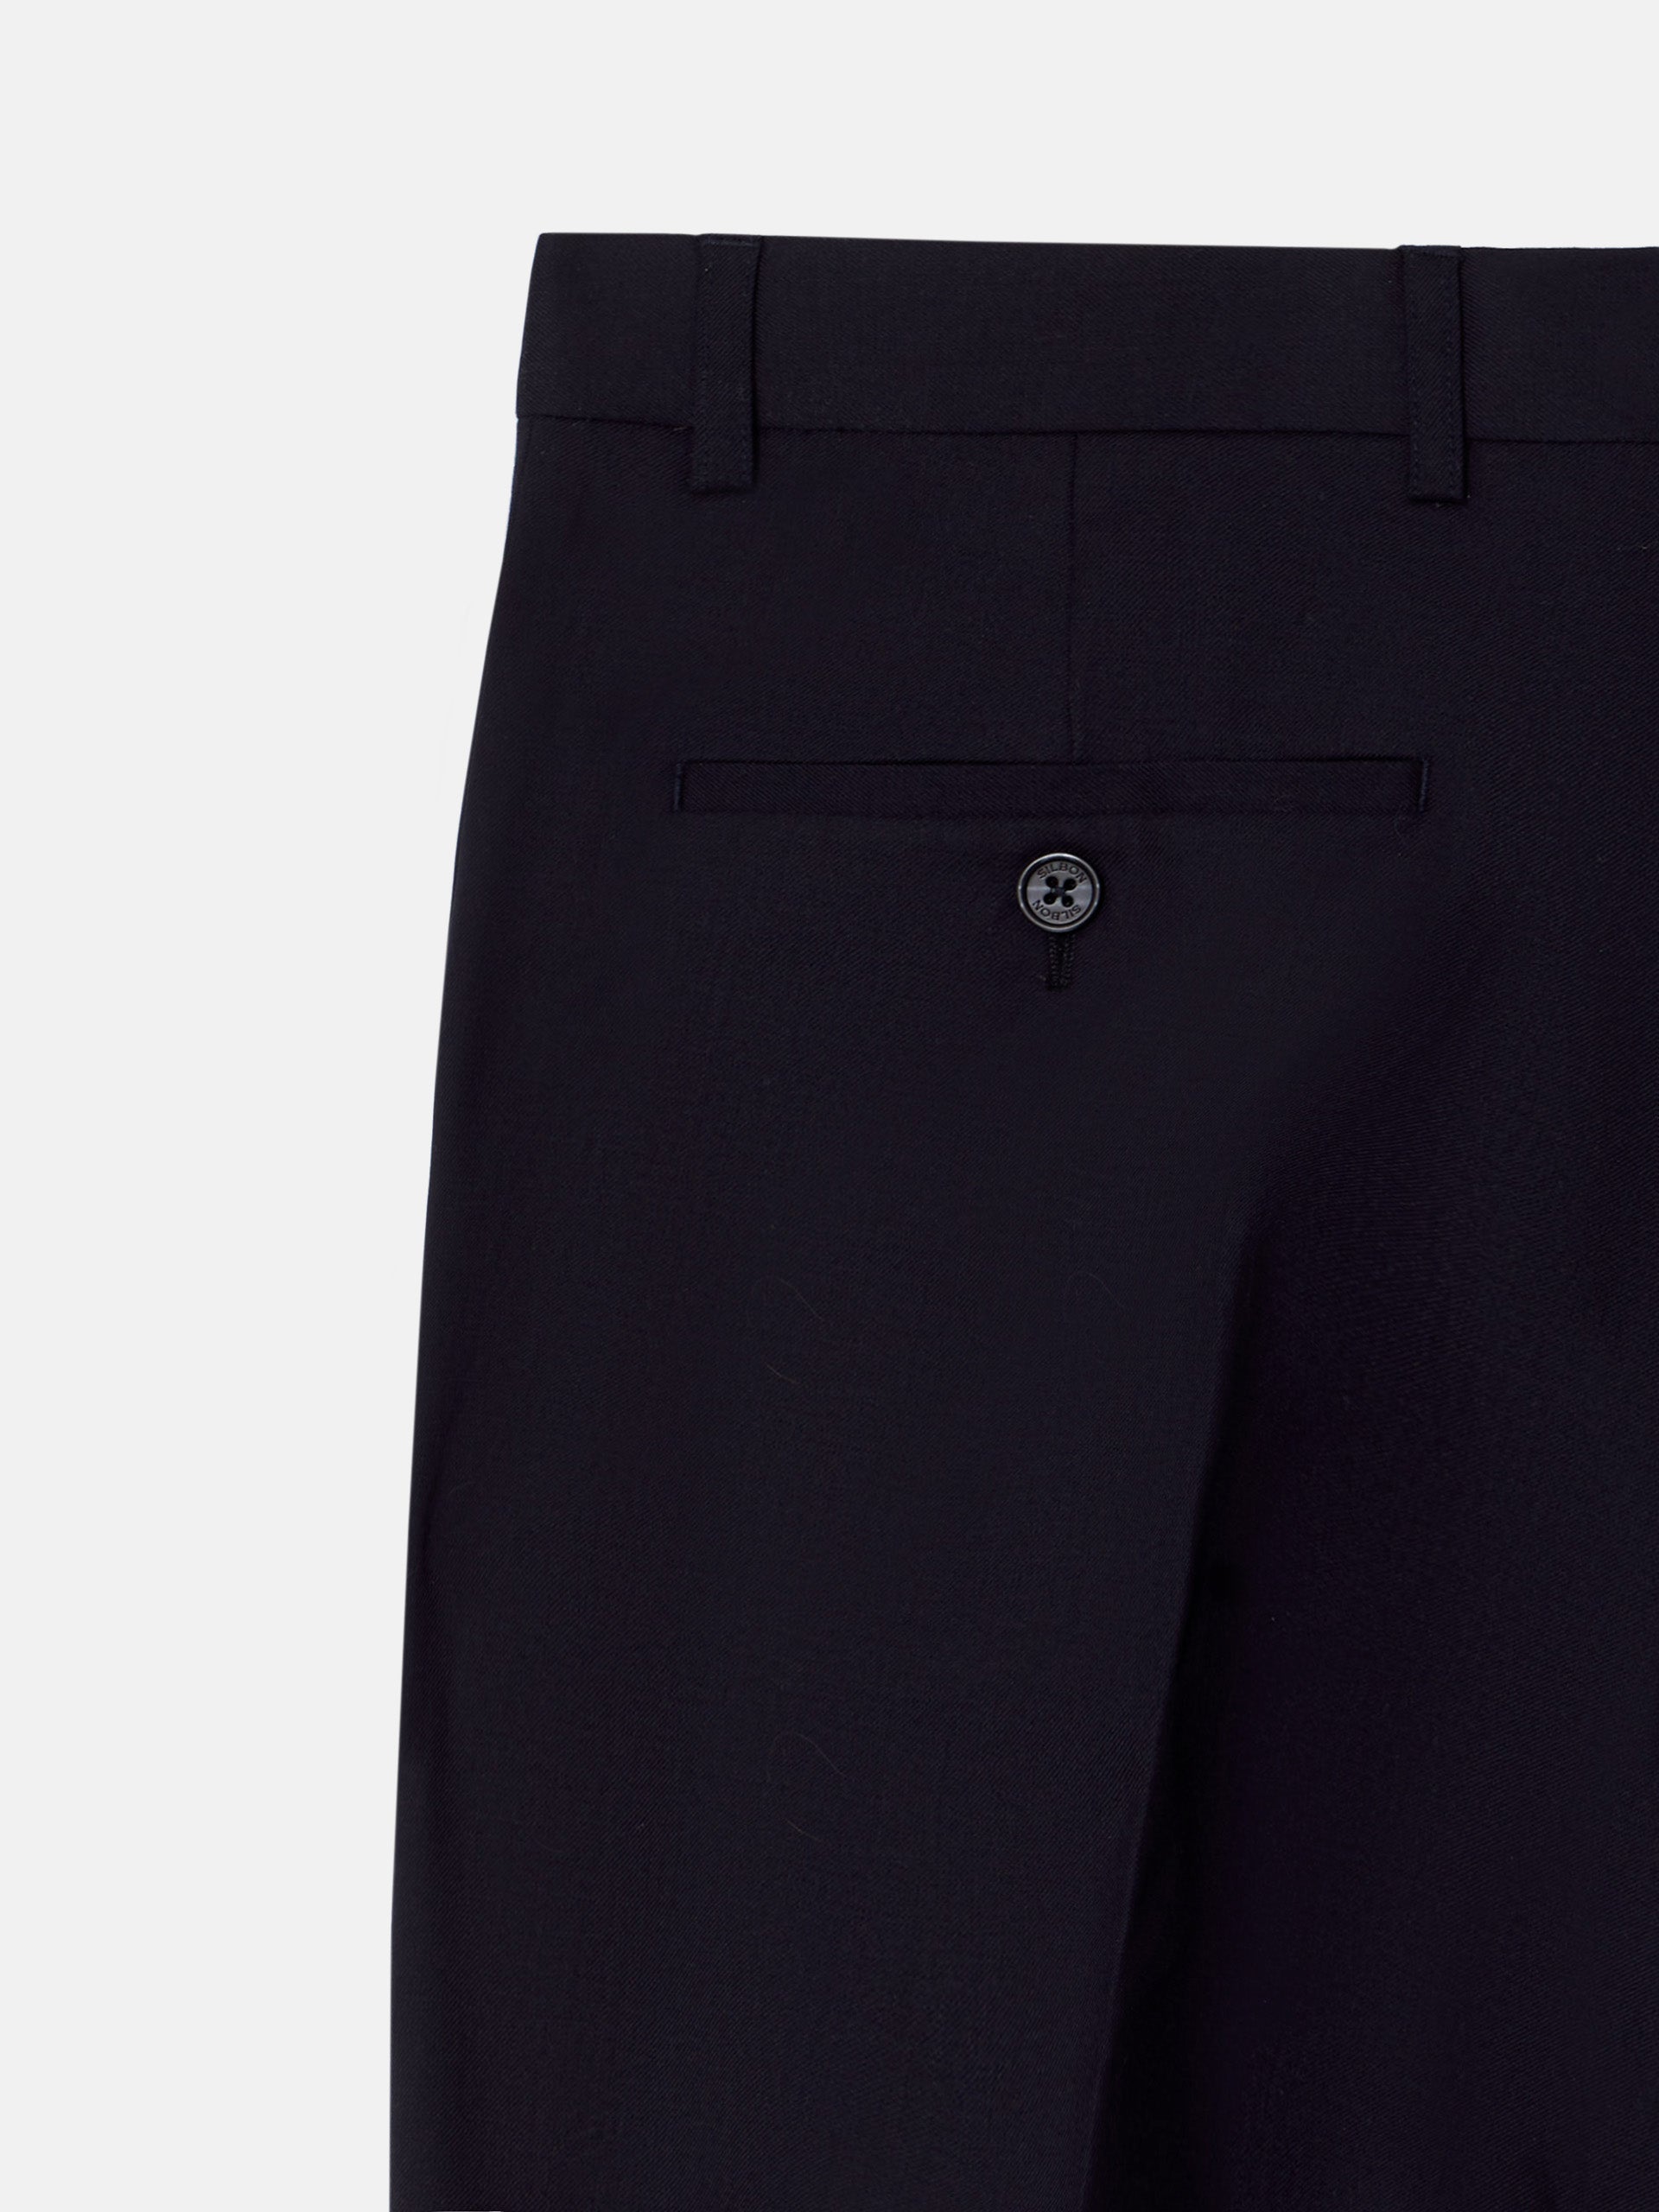 Natural stretch dark navy suit pants